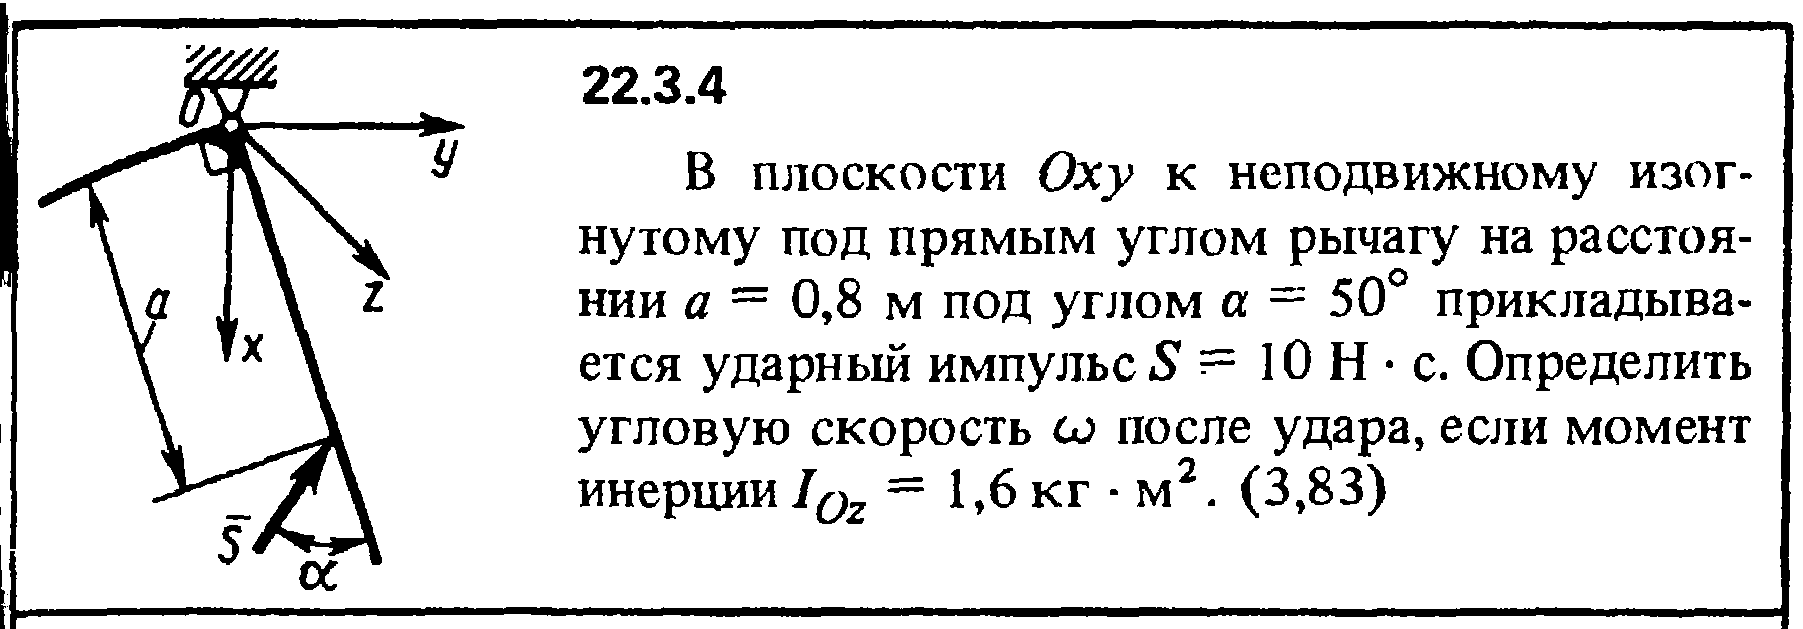 Решение 22.3.4 из сборника (решебника) Кепе О.Е. 1989